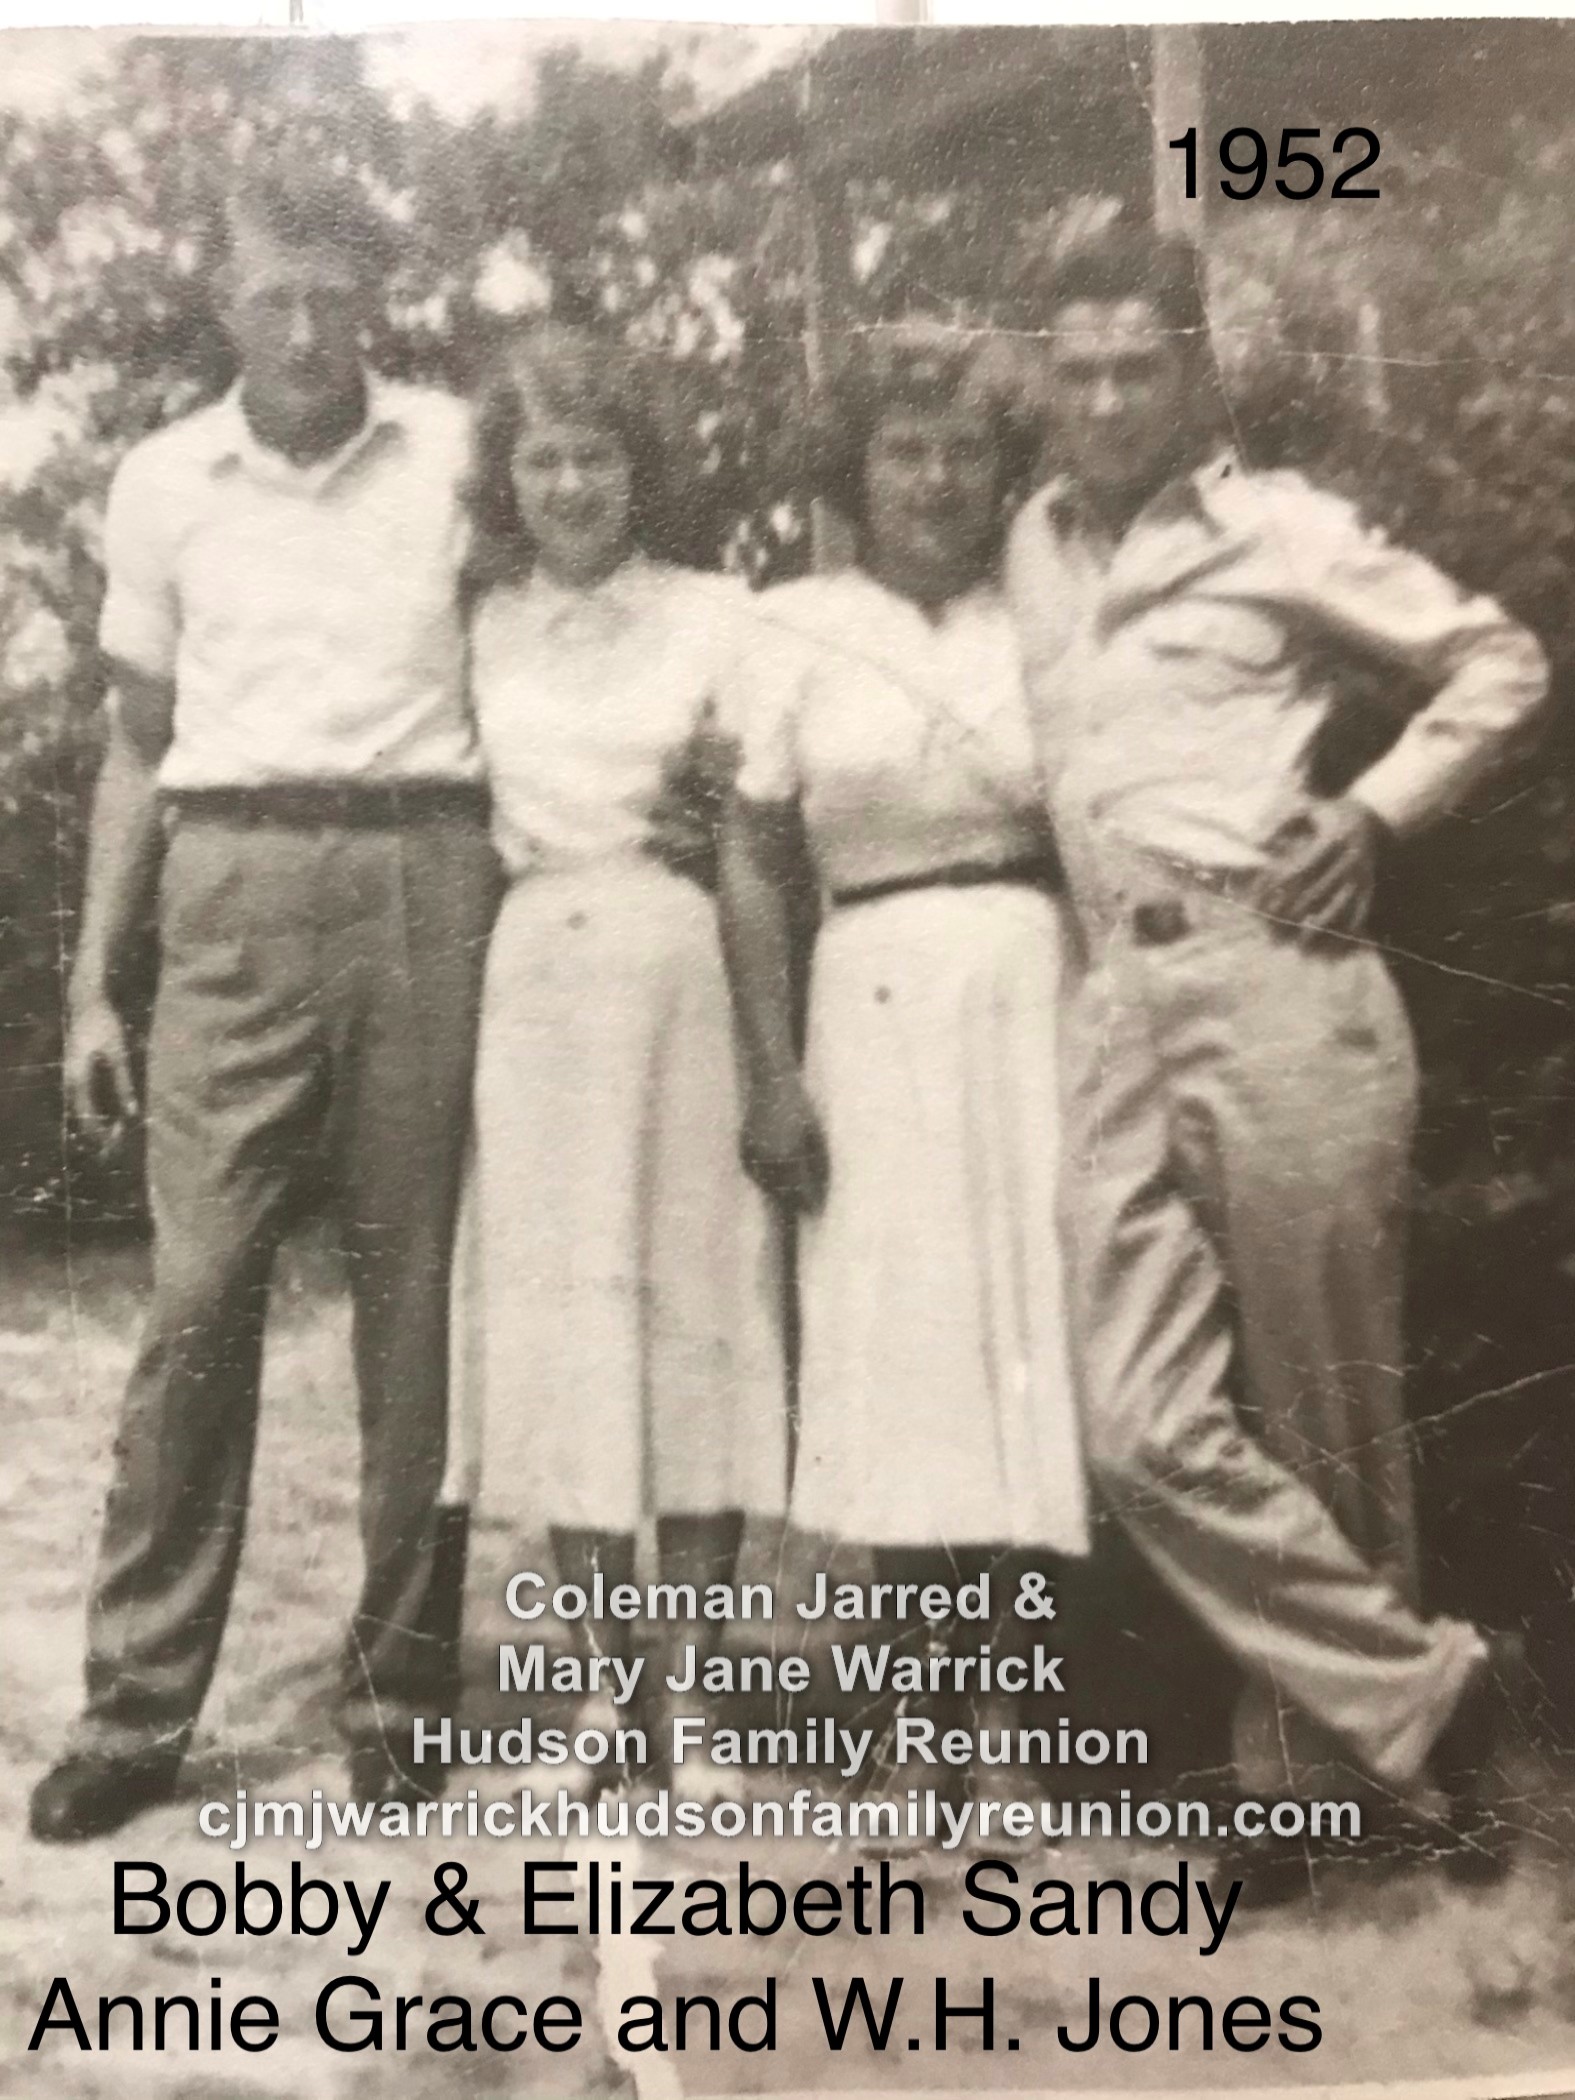 Elizabeth Jones Sandy with W.H. Jones, and Spouses